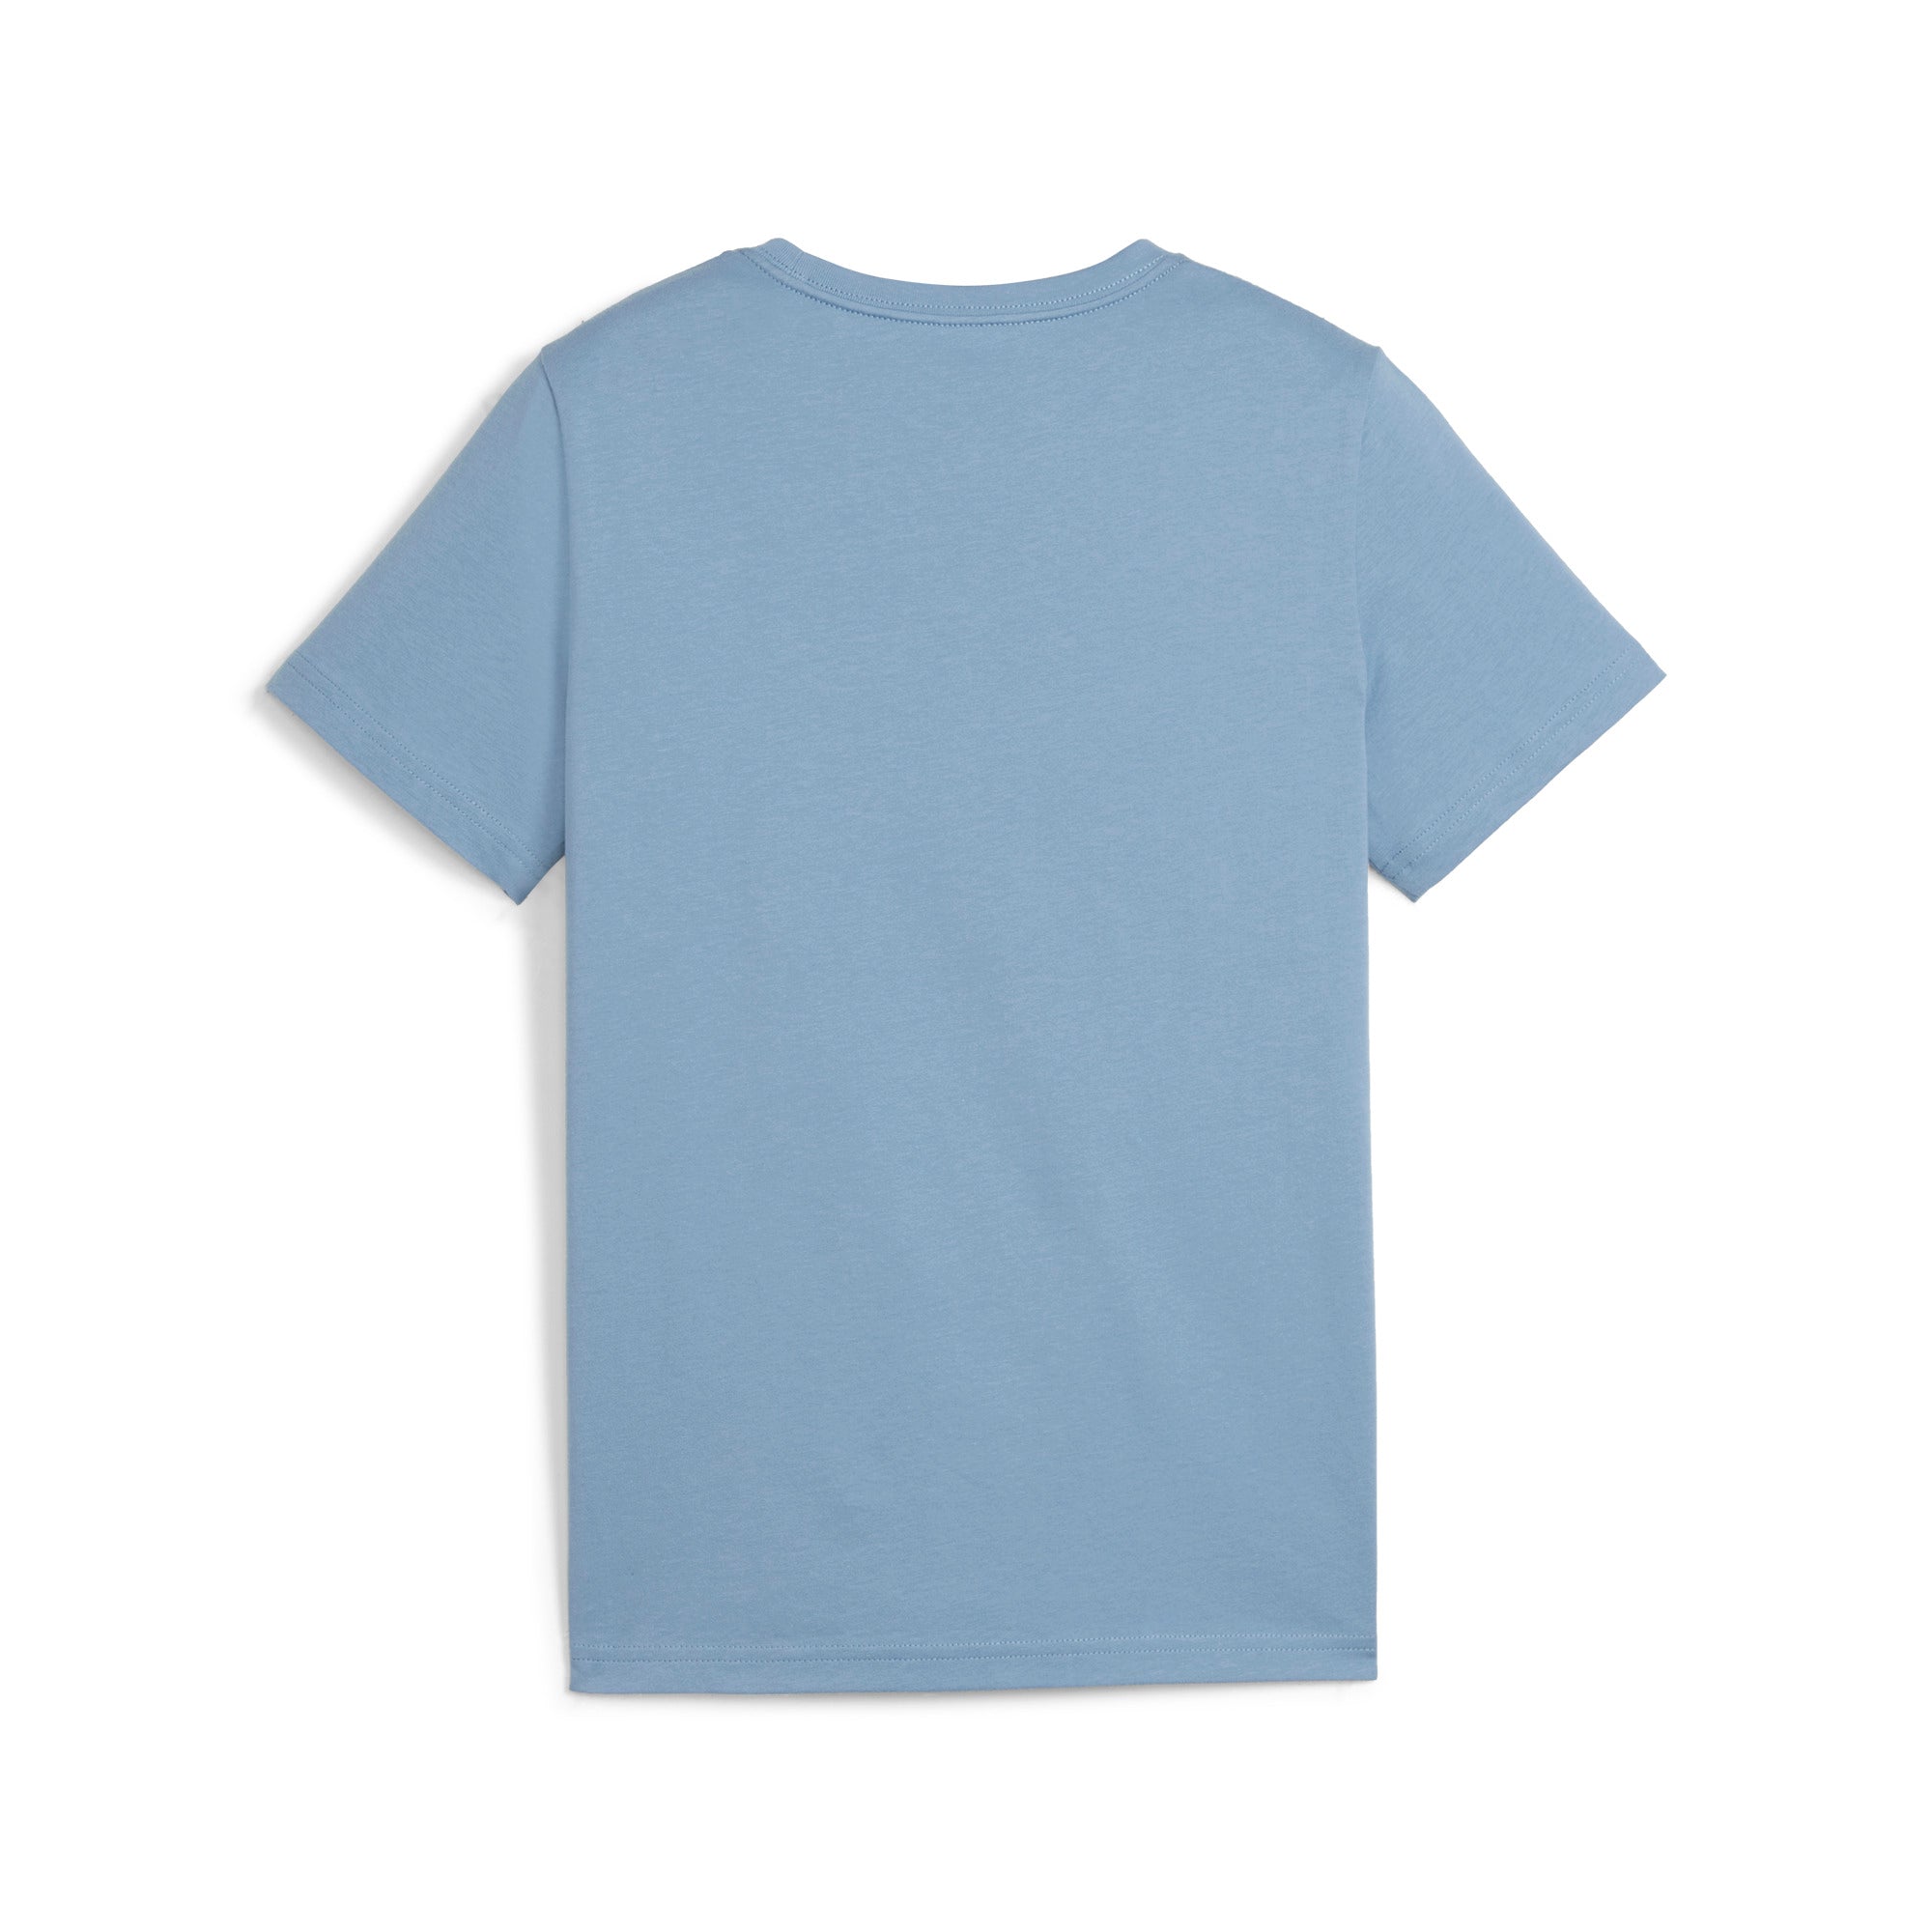 PUMA 大童基本系列ESS+短袖T恤